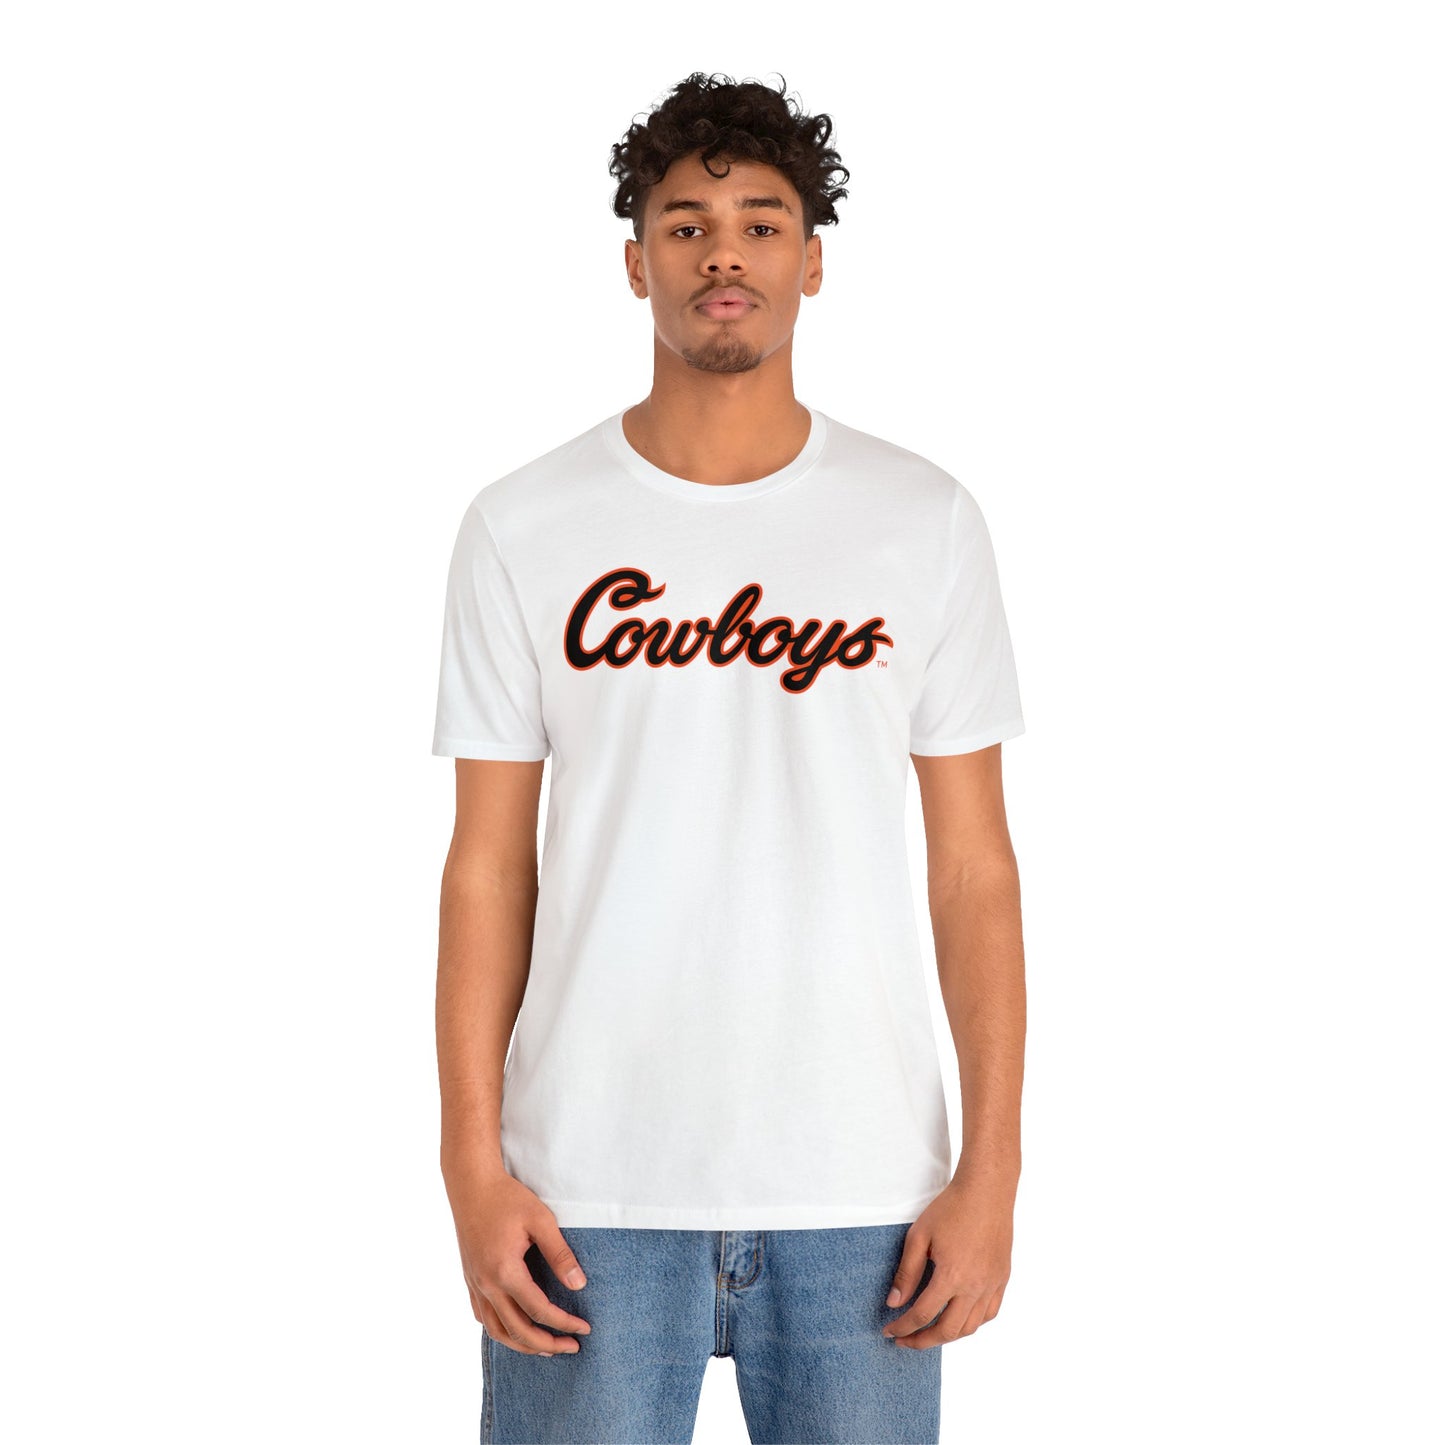 Copy of Jaxson Crull Adult T-Shirt